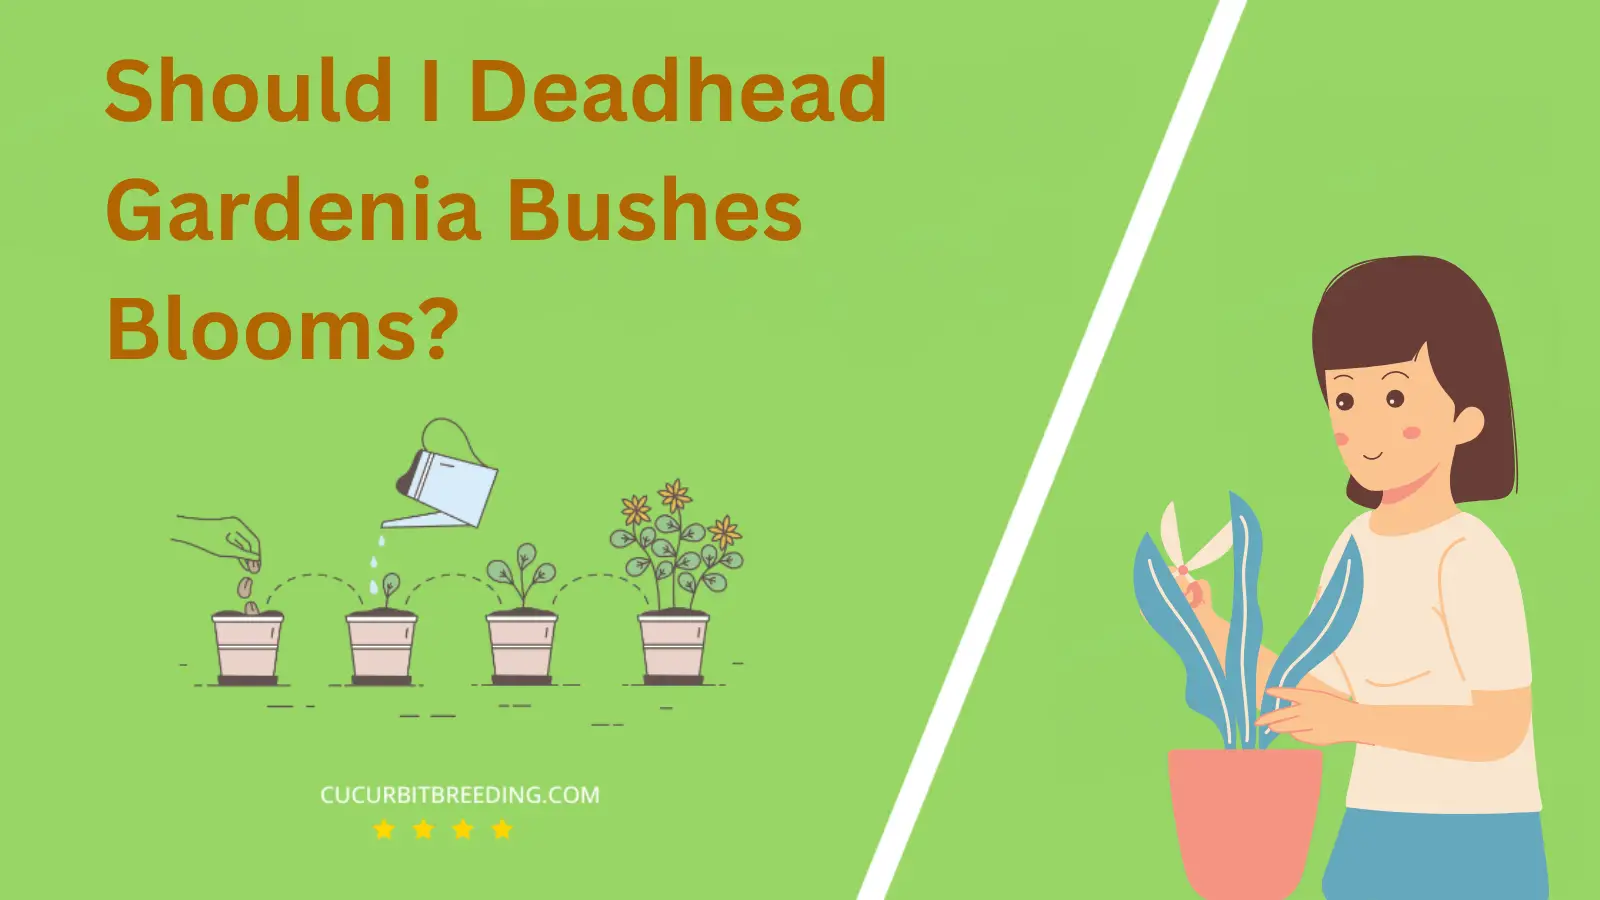 Should I Deadhead Gardenia Bushes Blooms?